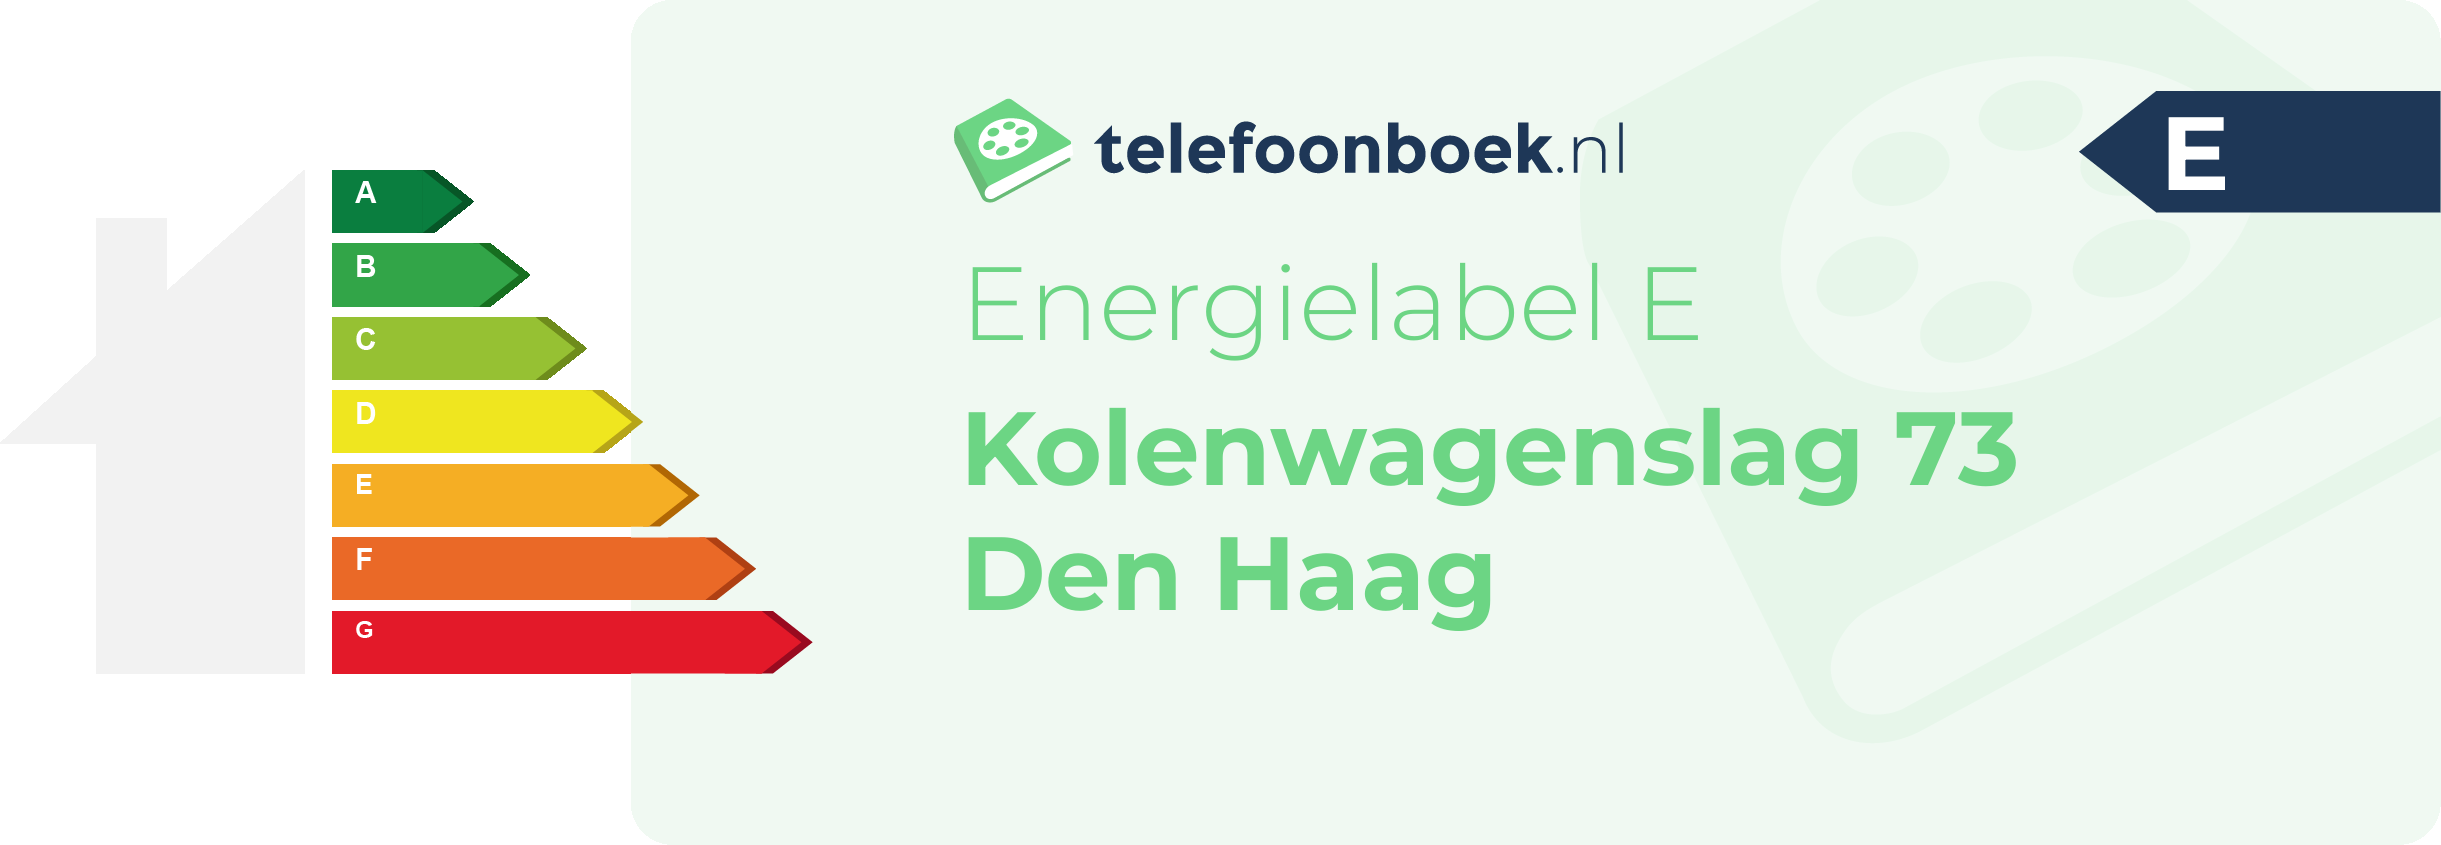 Energielabel Kolenwagenslag 73 Den Haag